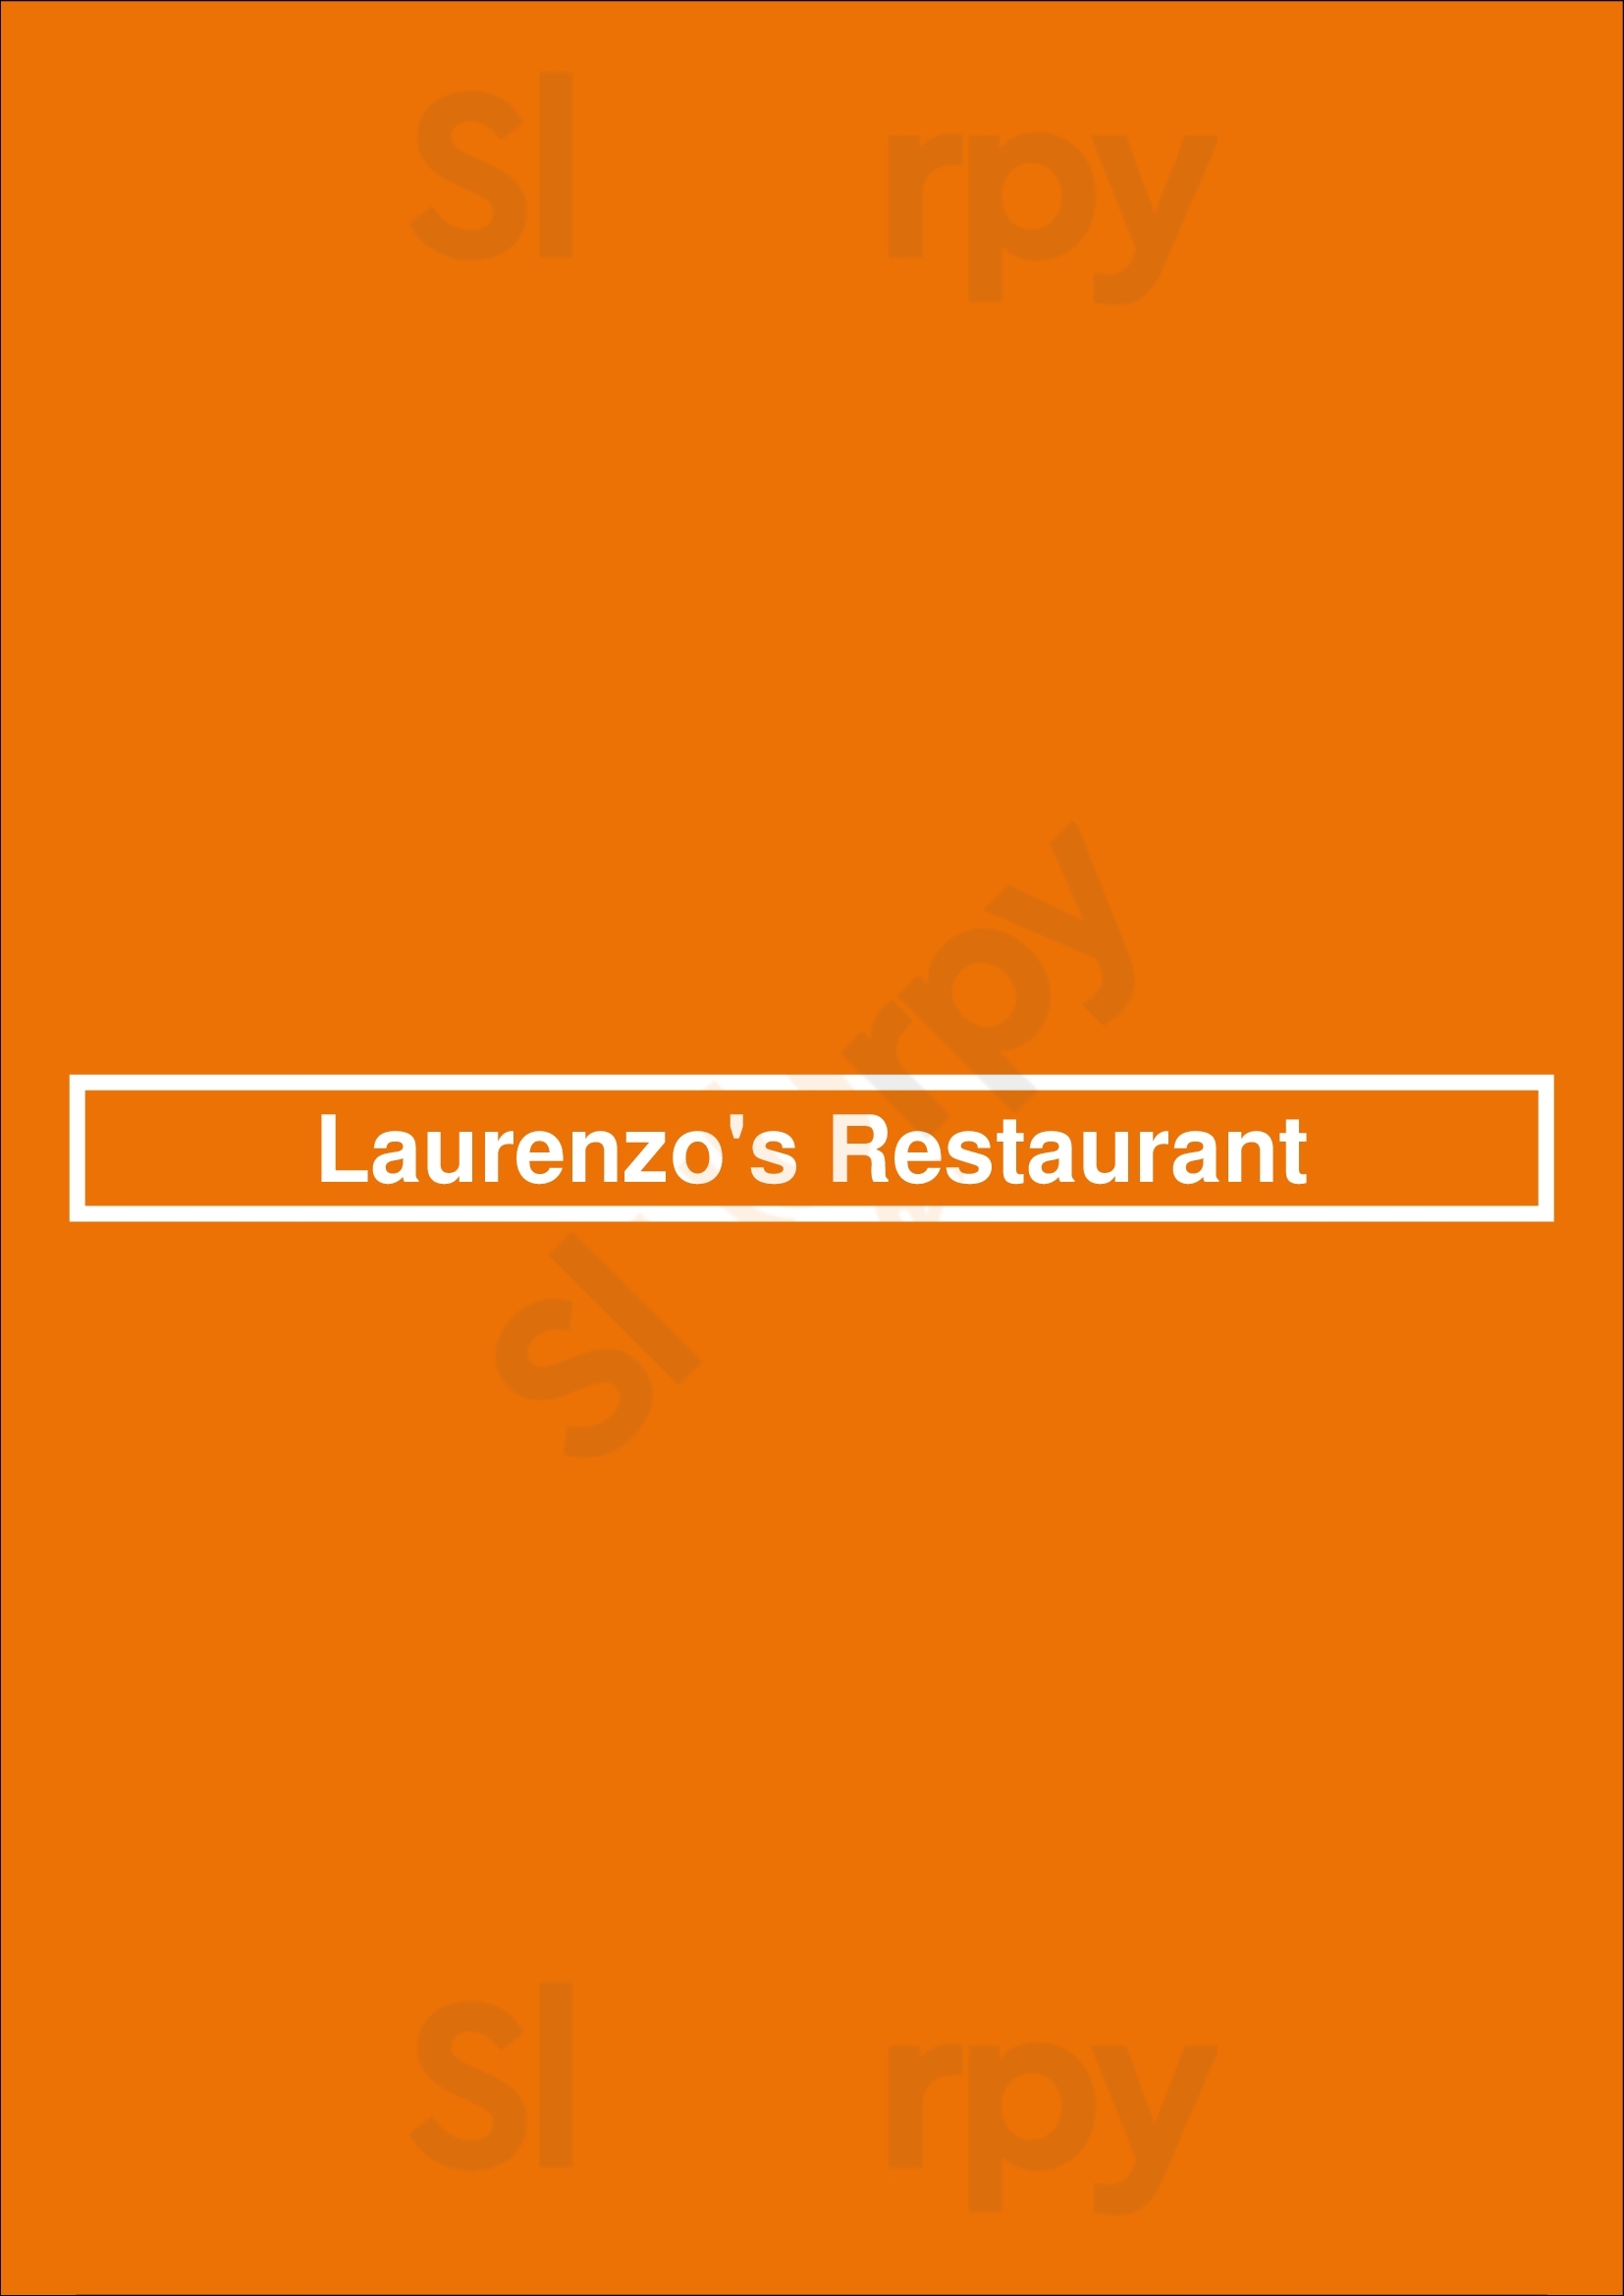 Laurenzo's Restaurant Houston Menu - 1